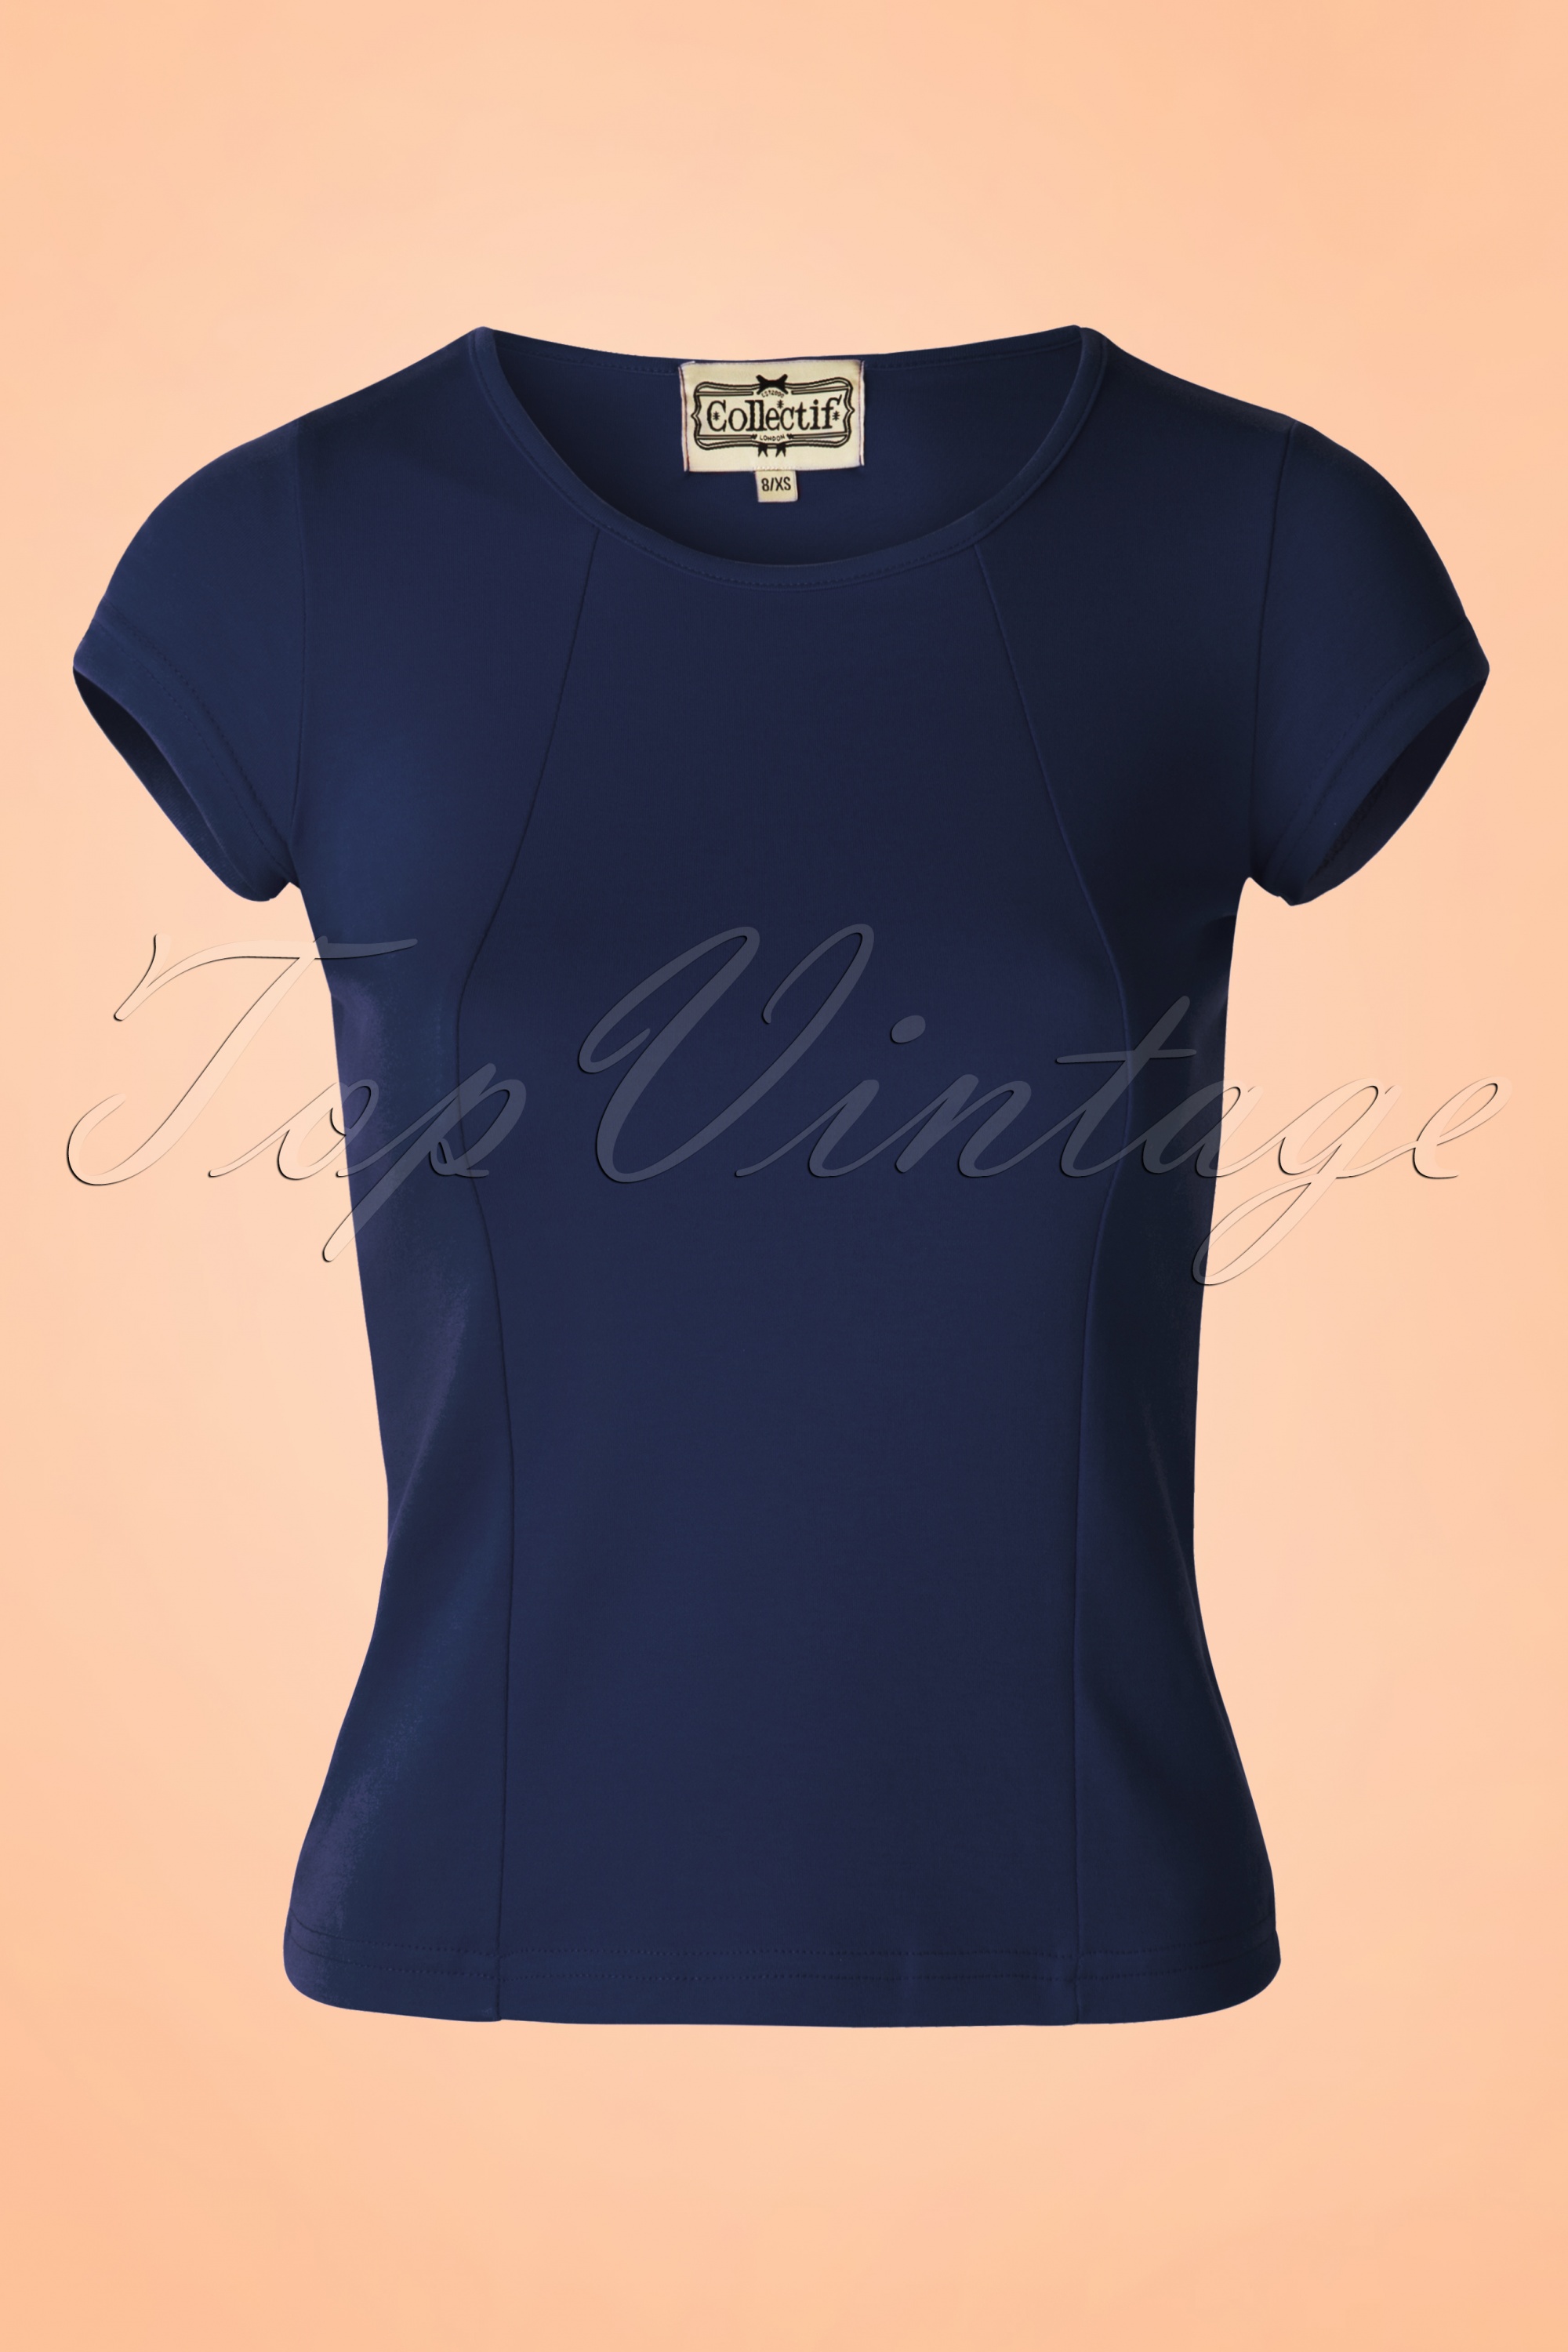 Collectif Clothing - Alice effen T-shirt in marineblauw